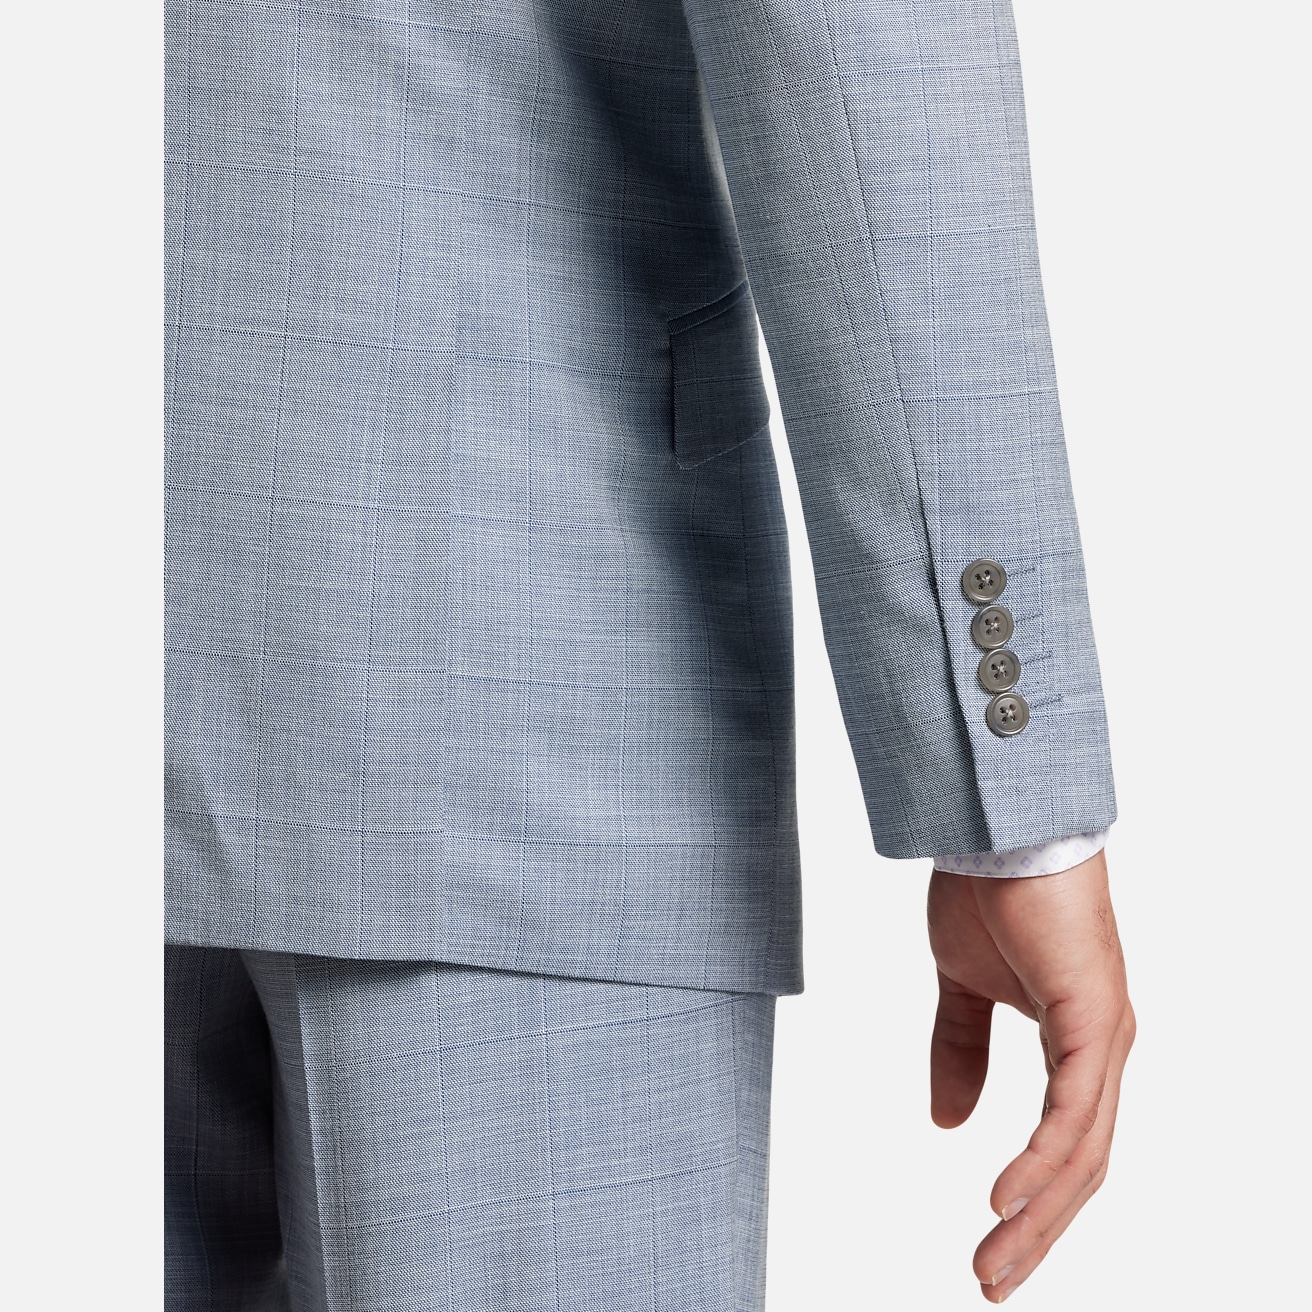 Wilke-Rodriguez Slim Fit Suit, All Sale